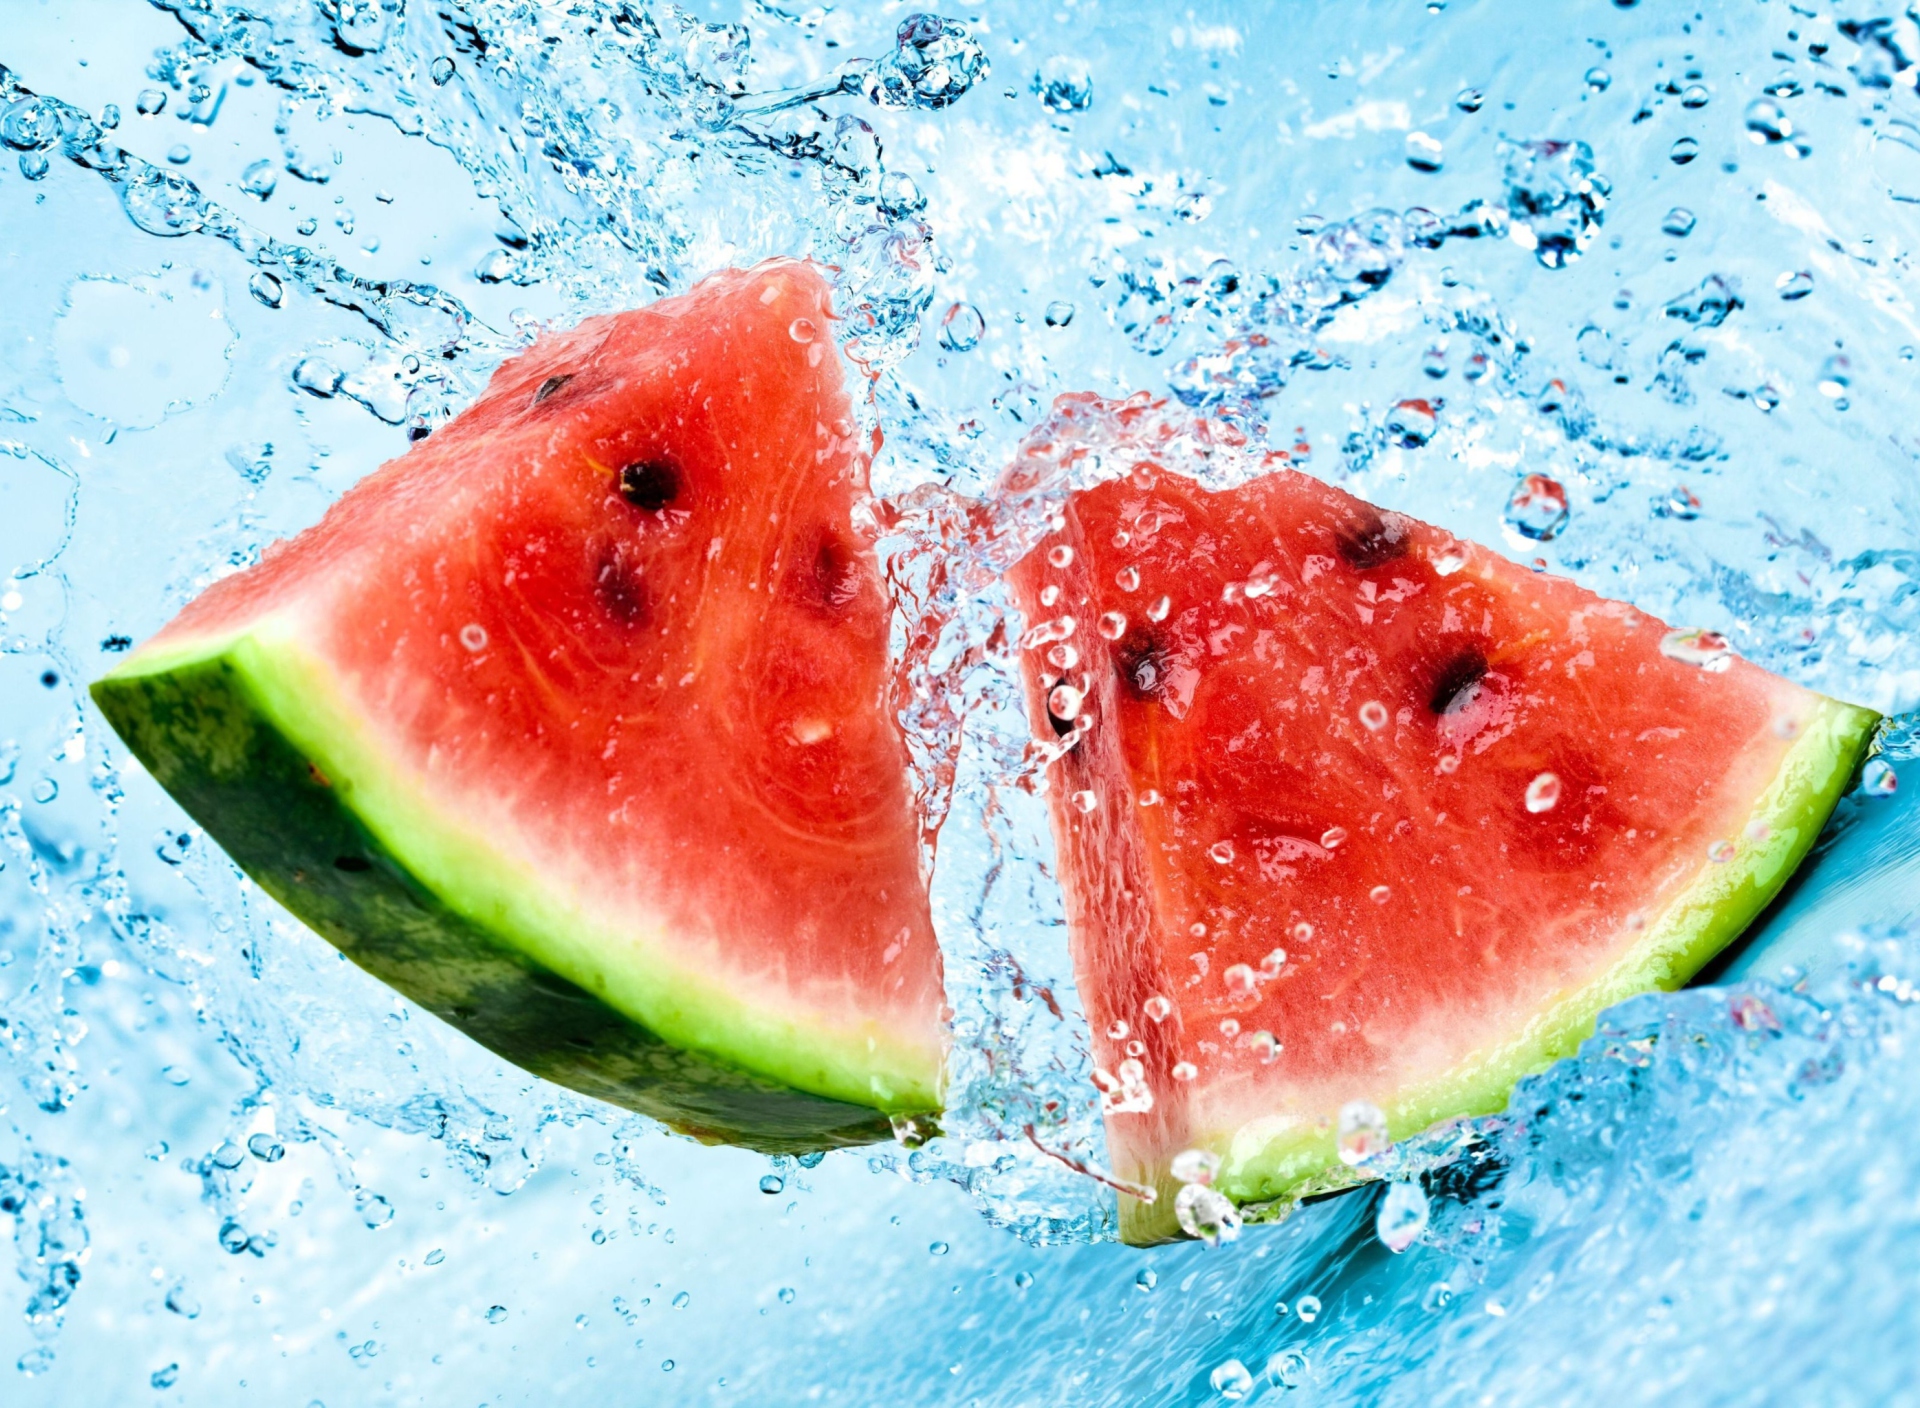 Sfondi Watermelon In Water 1920x1408